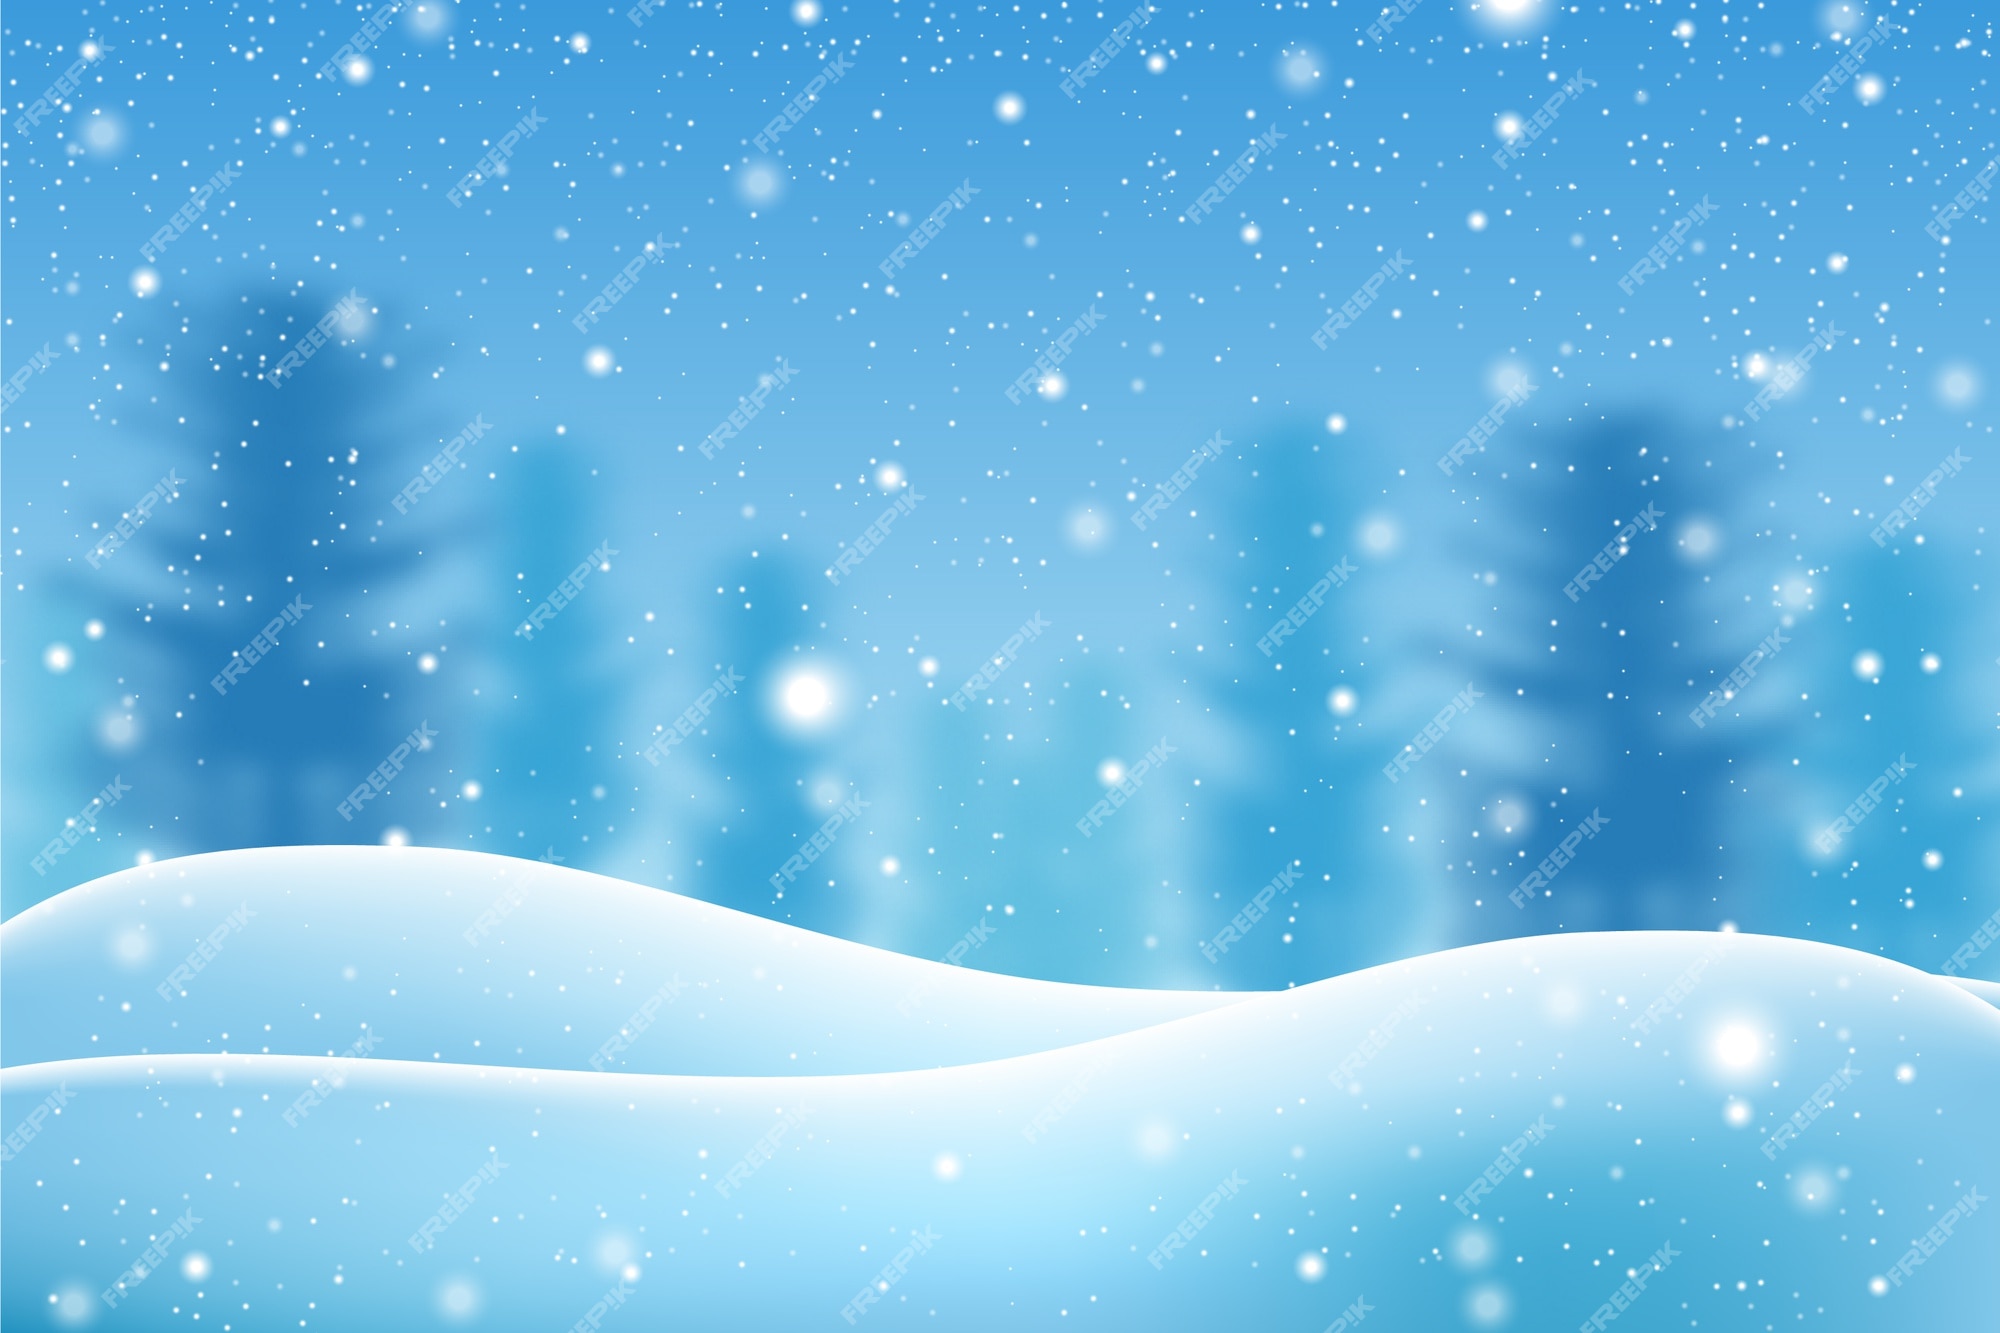 Snow Images - Free Download on Freepik